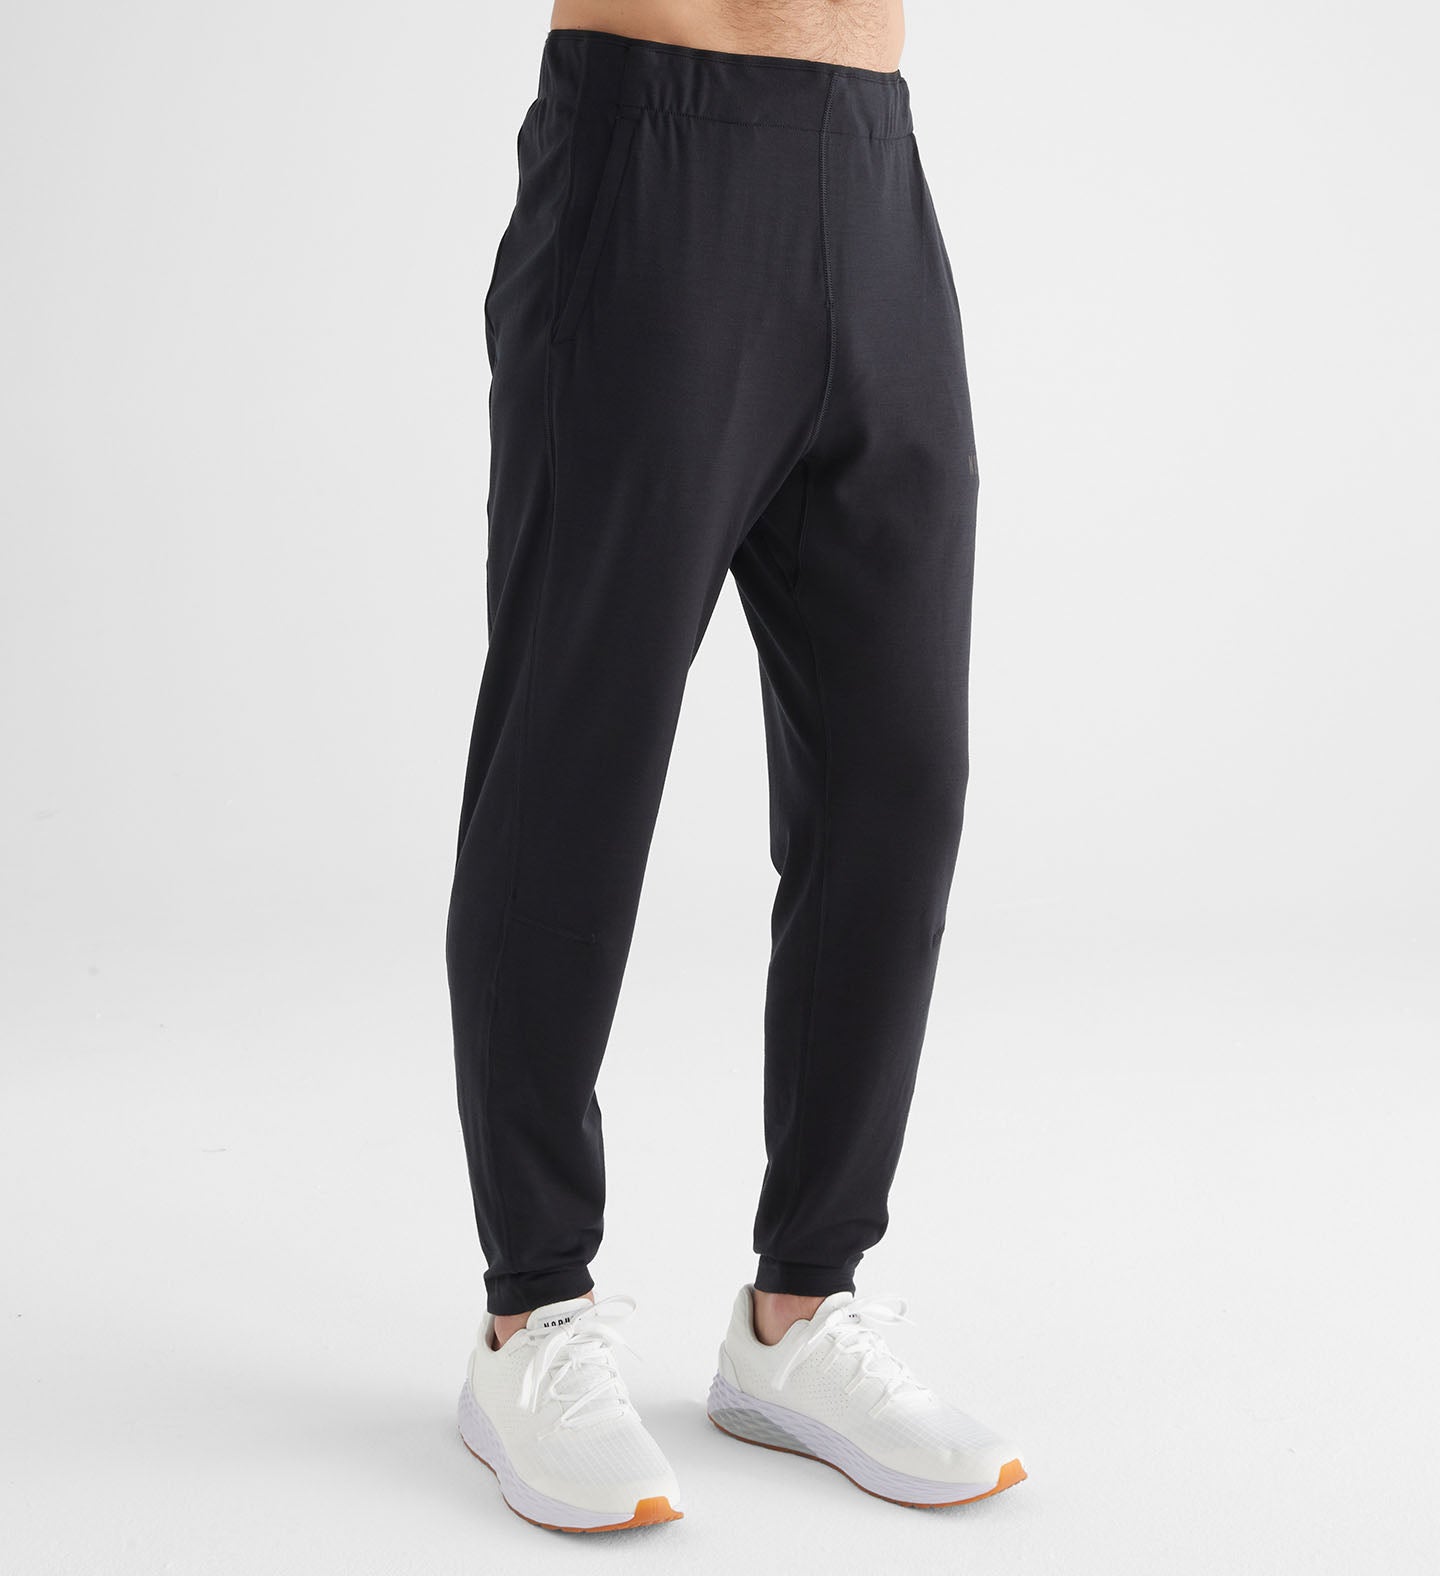 Adidas Black Jogger Sweatpants Workout Athletic Pants- XS - Pre